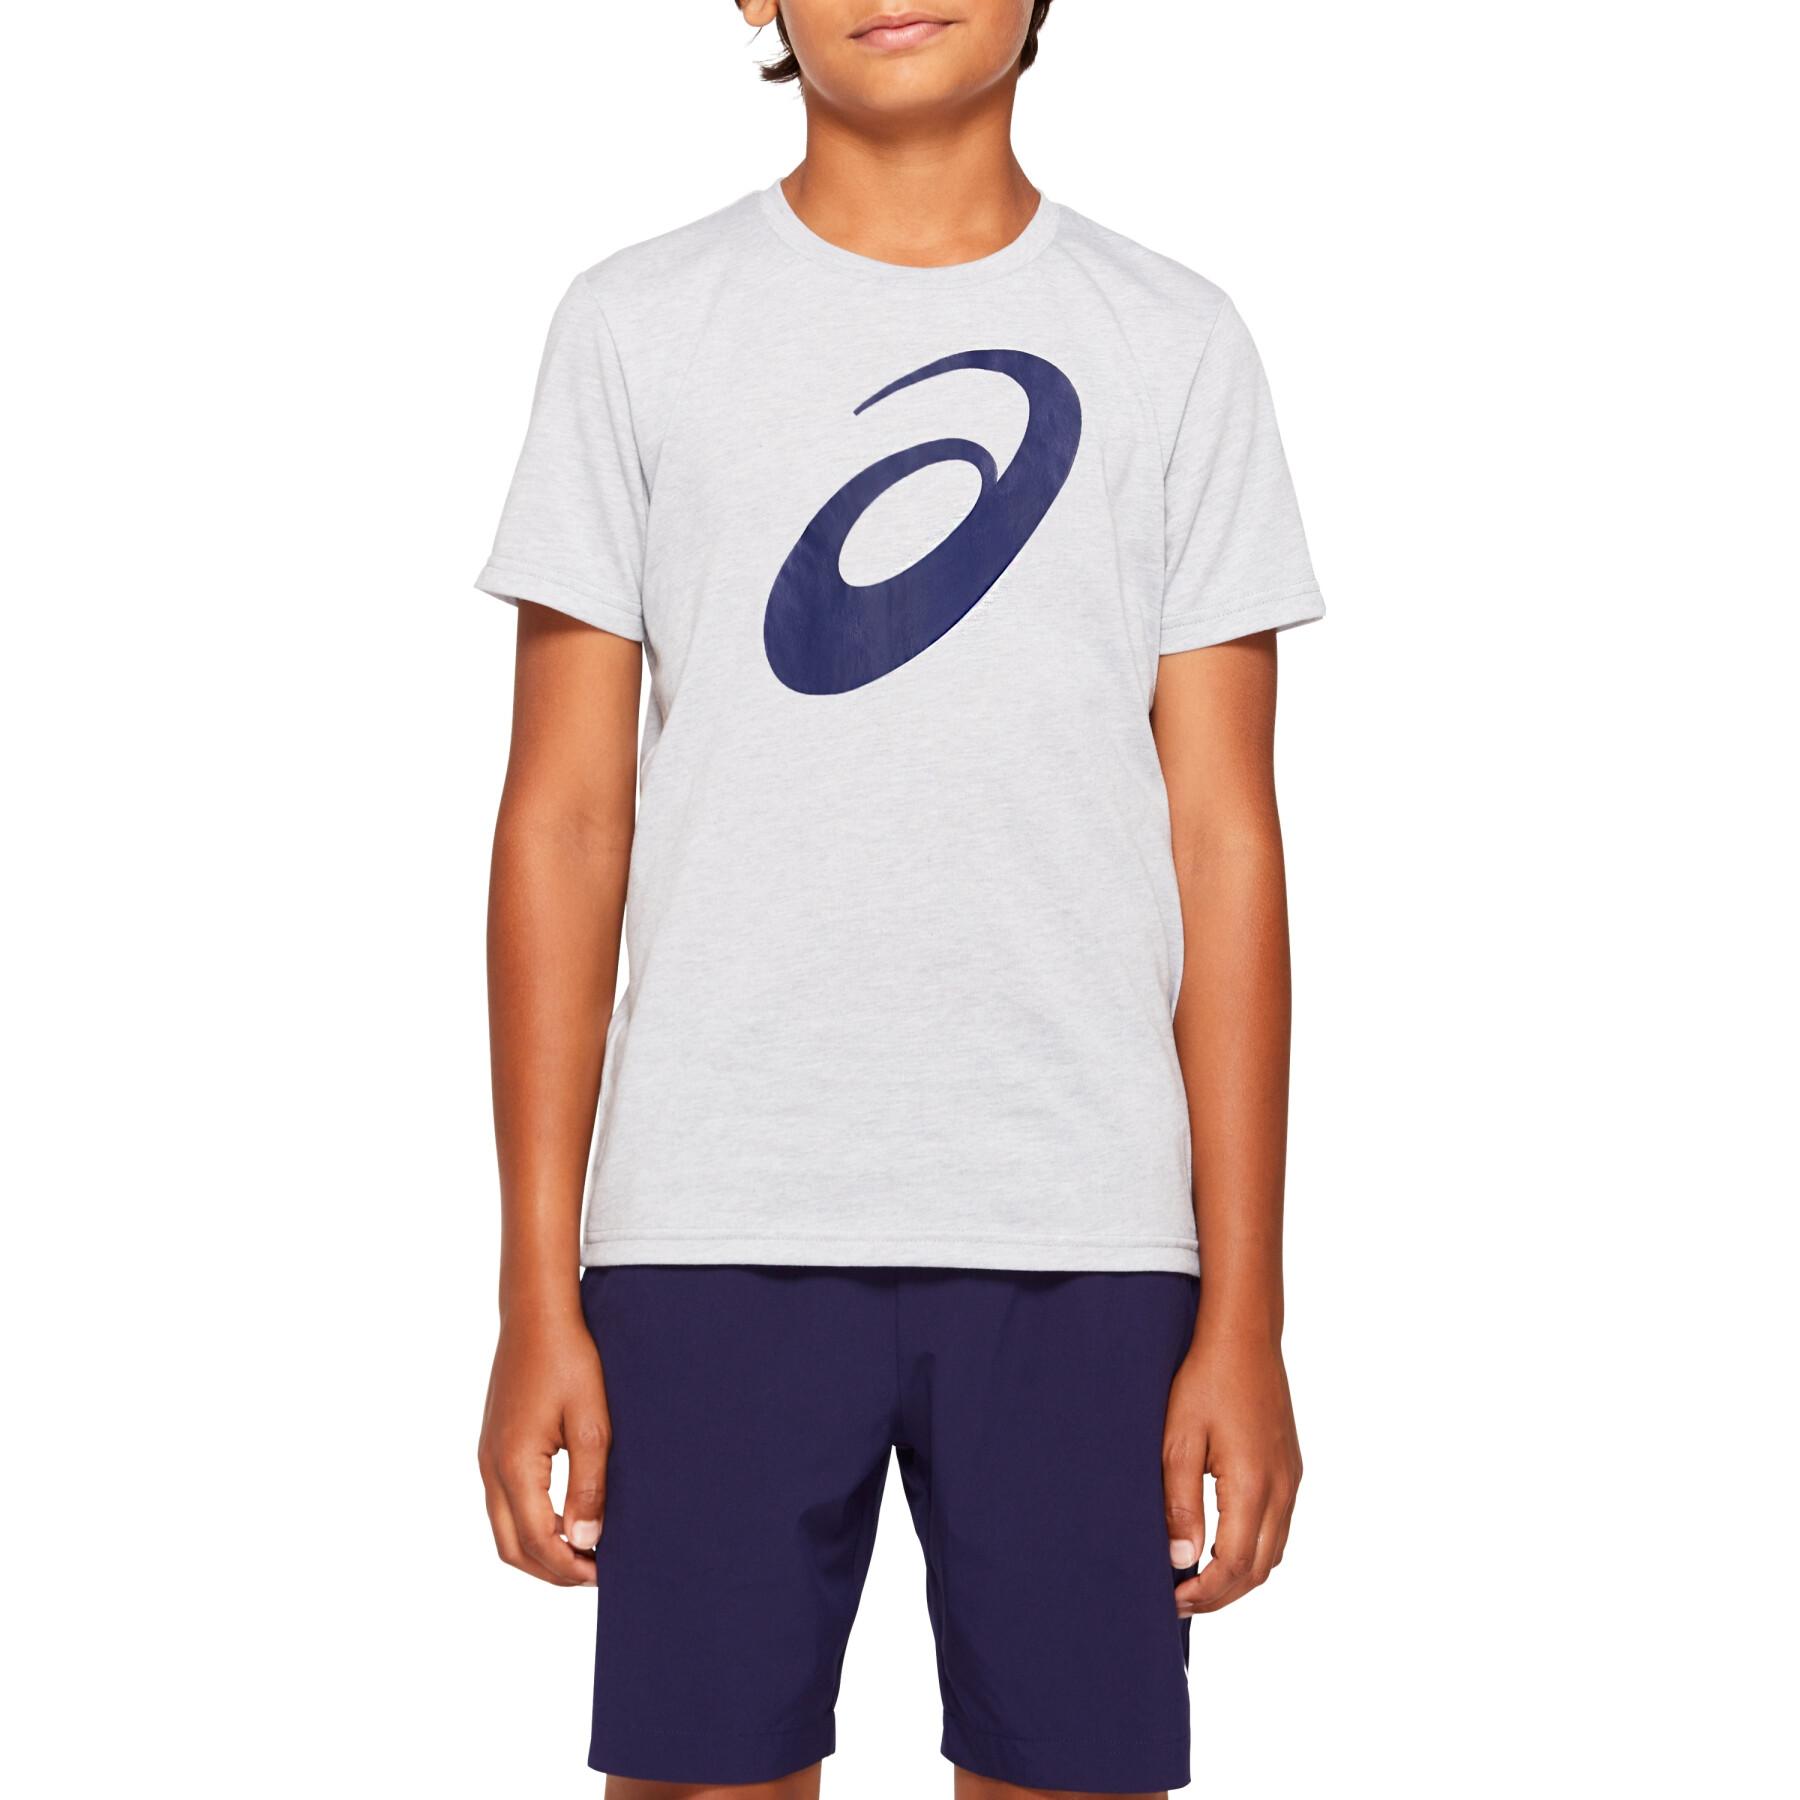 Koszulka dziecięca Asics Big Spiral